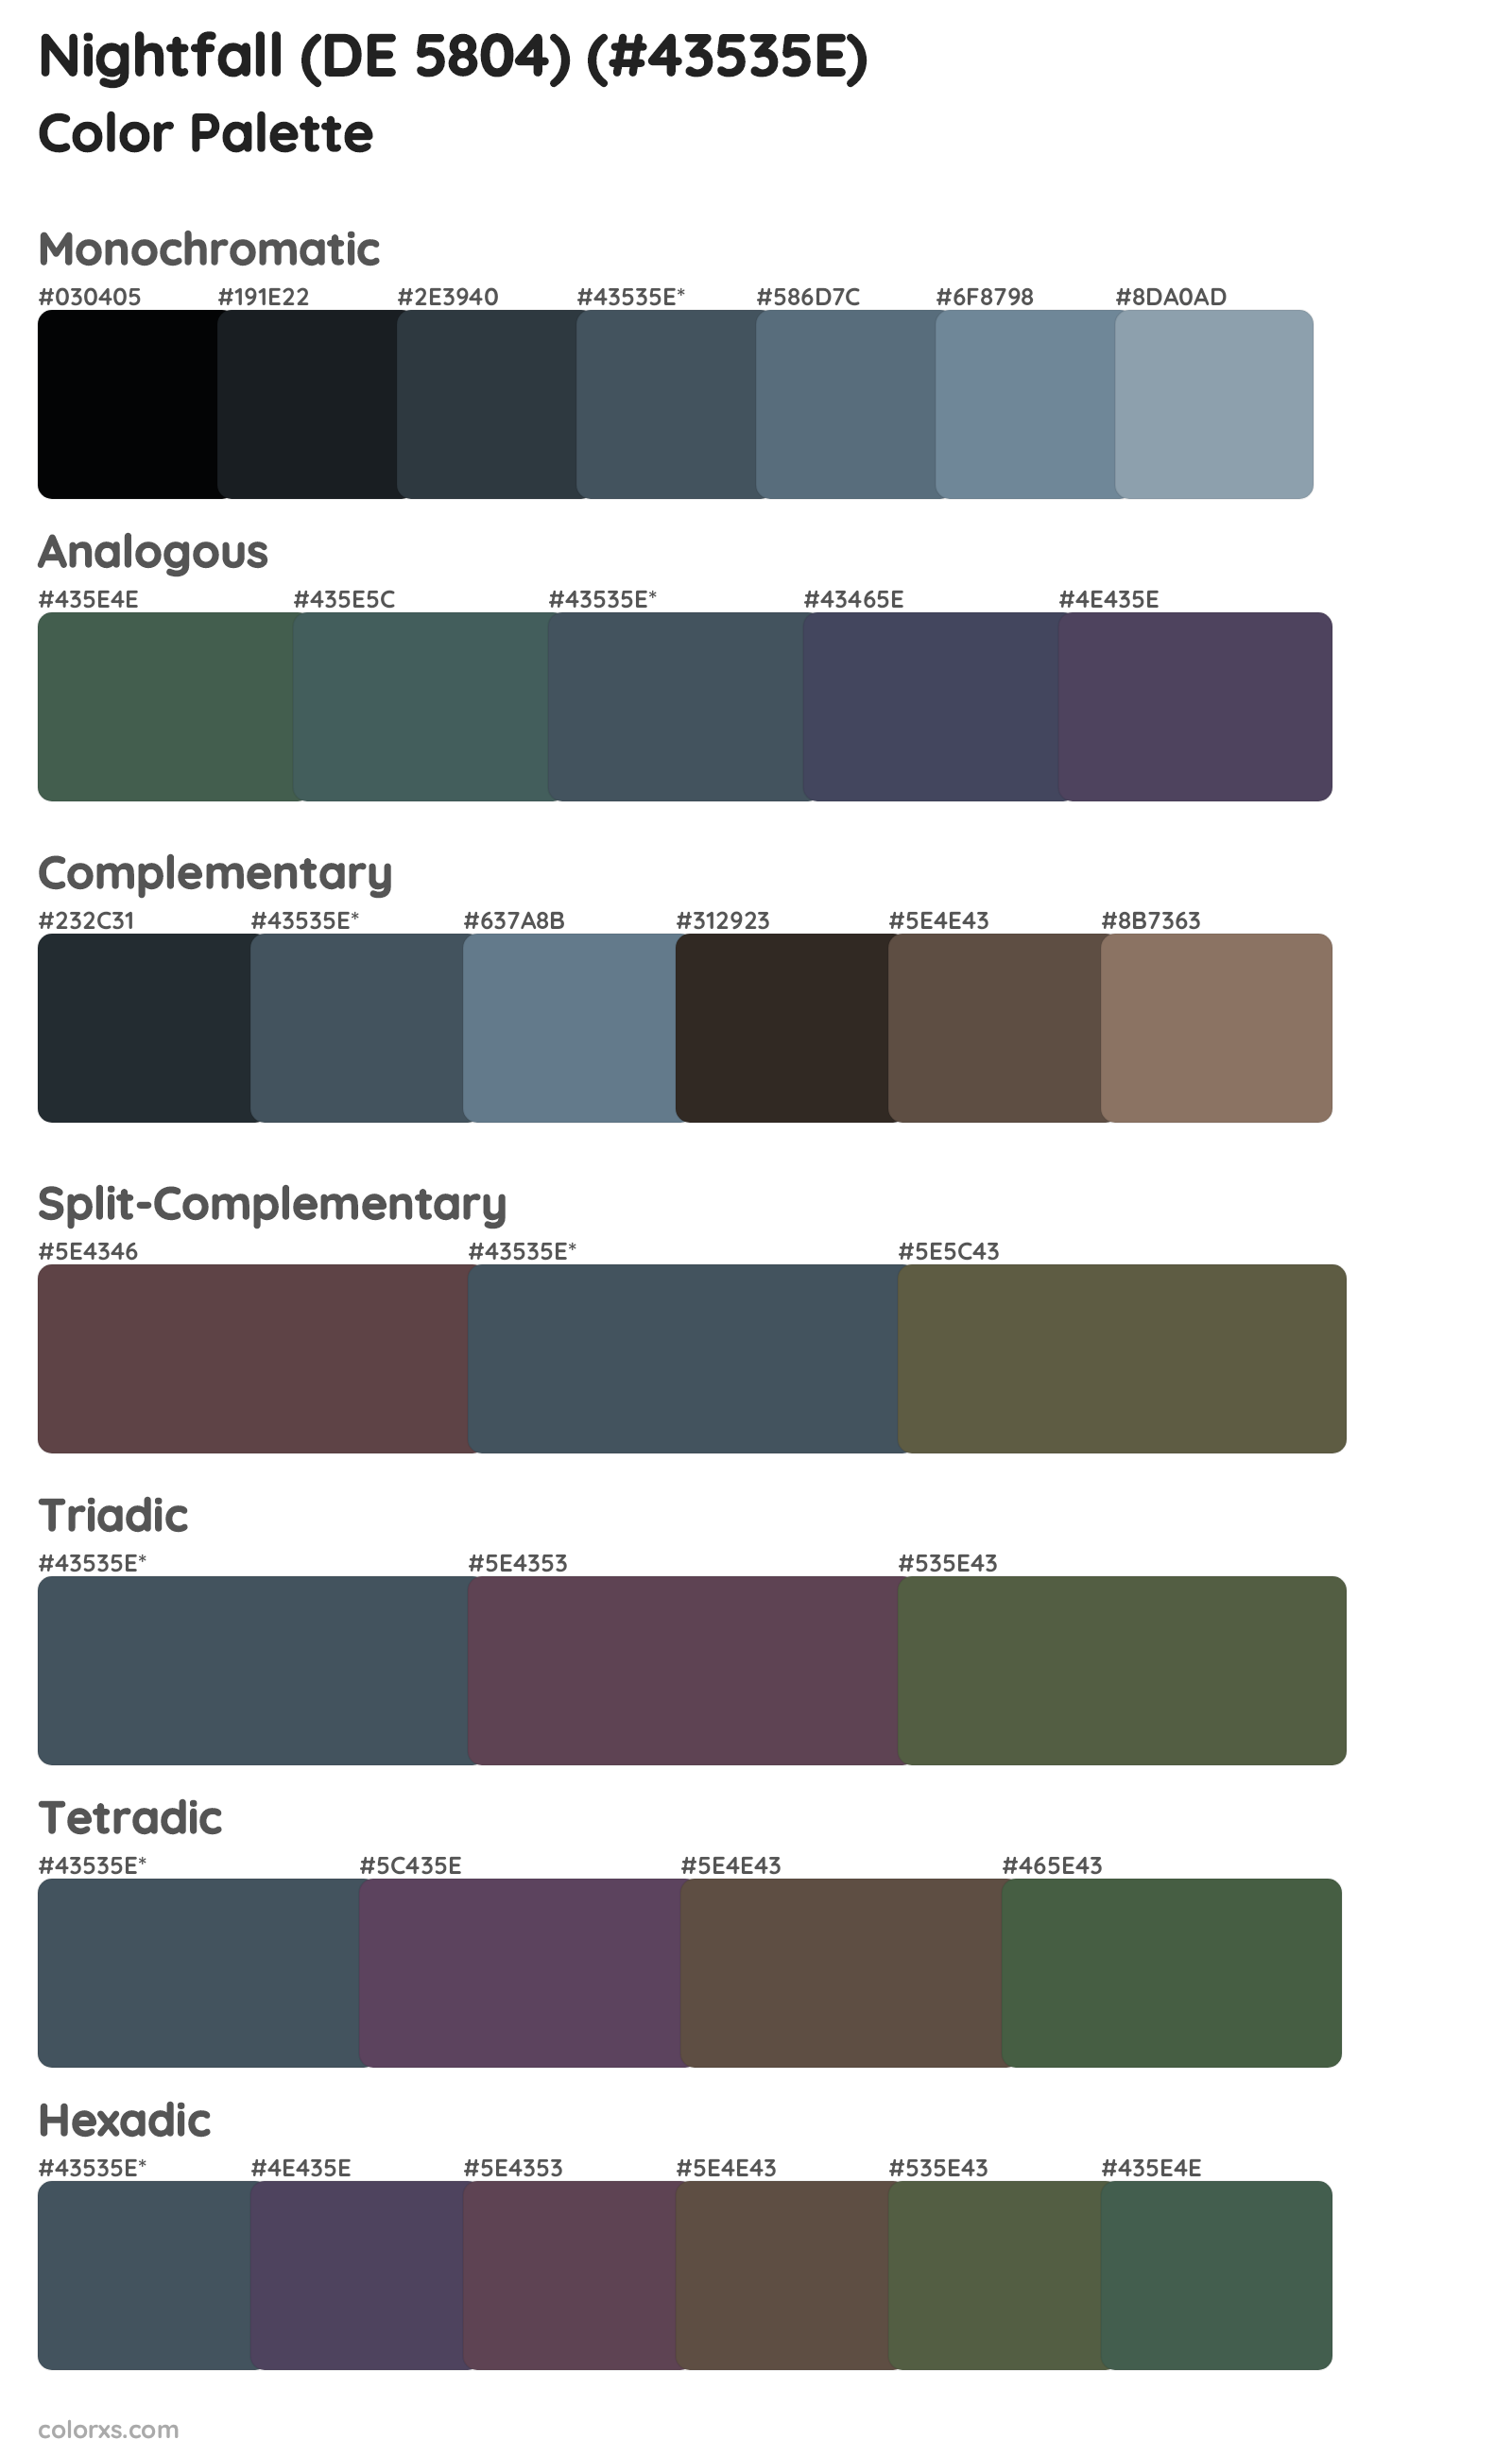 Nightfall (DE 5804) Color Scheme Palettes